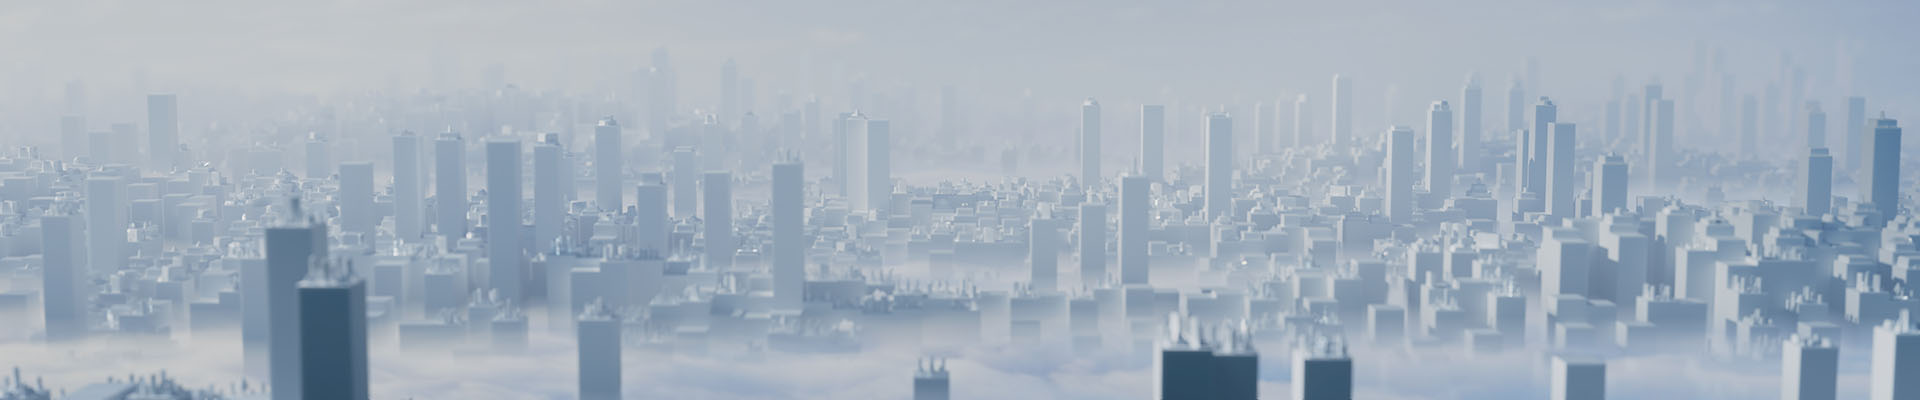 Futuristic skyline animation